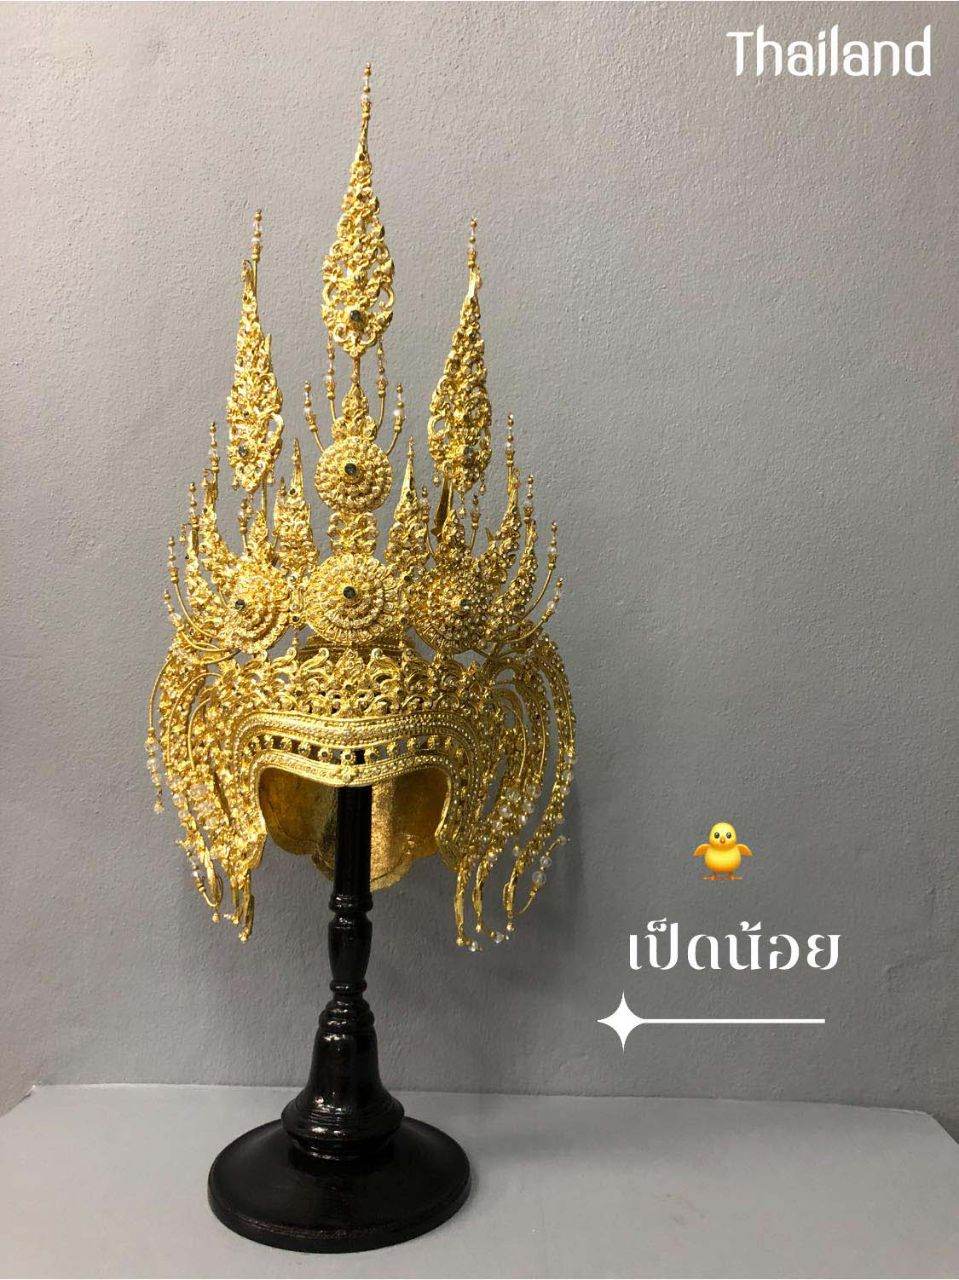 Thai Apsara Crown, Apsorn headdress